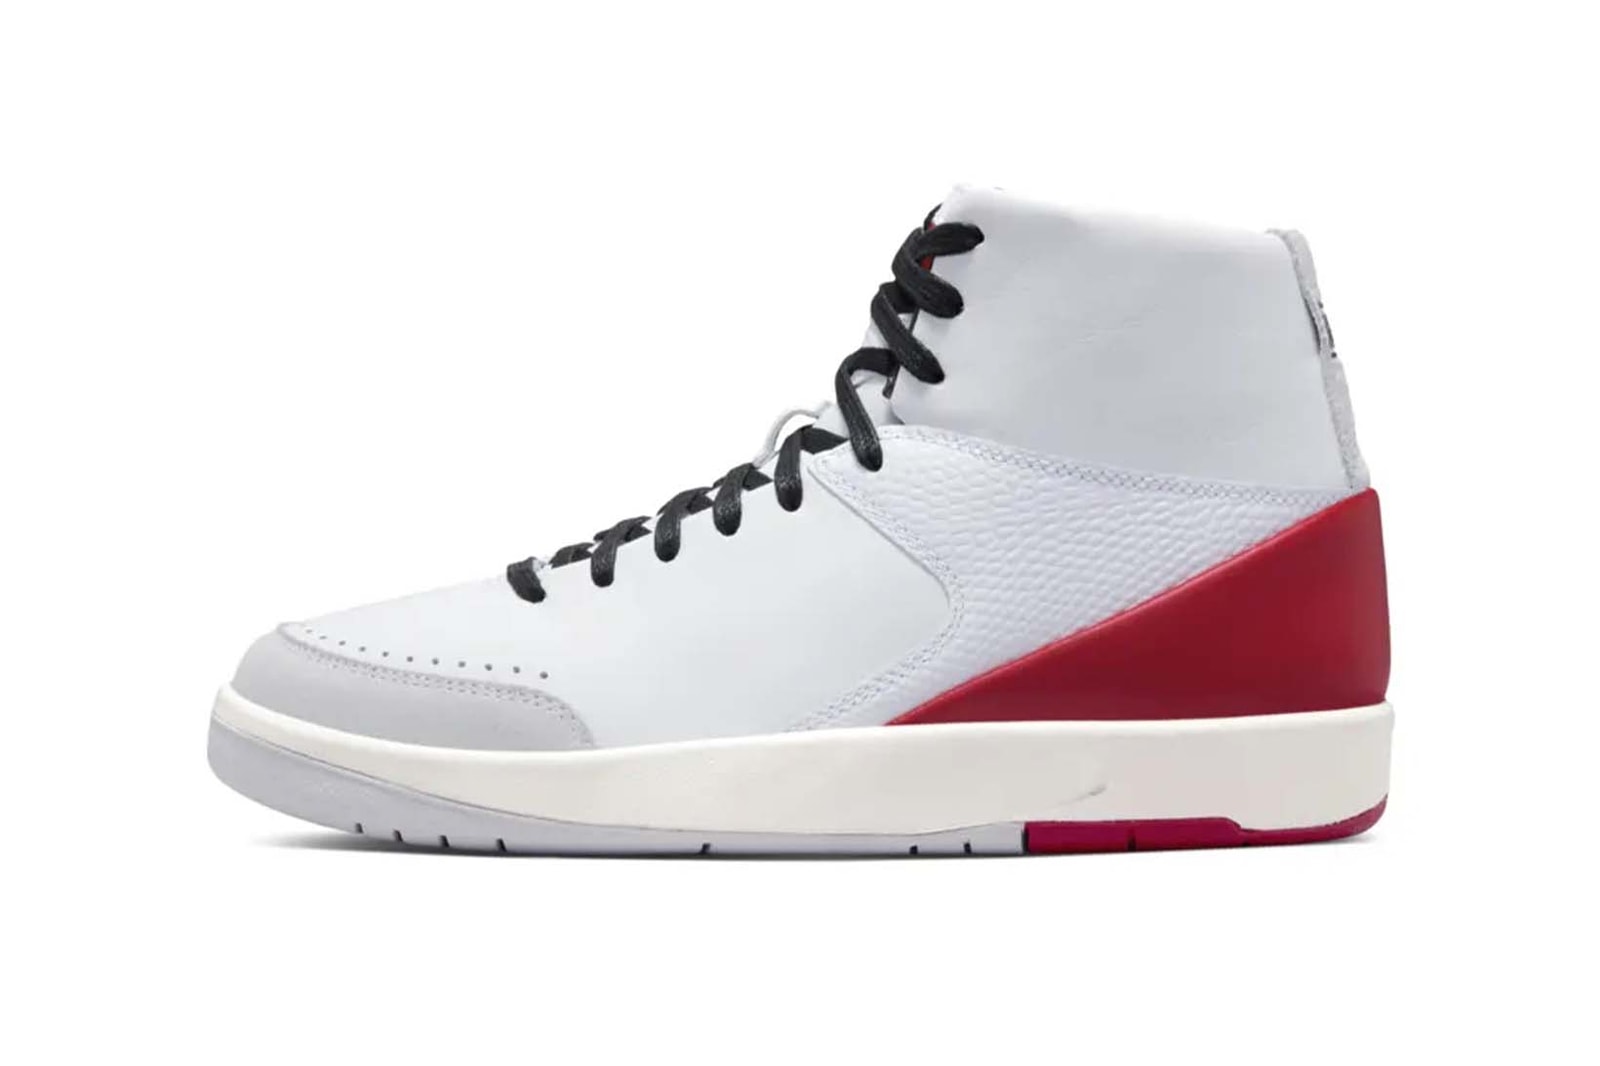 Sneaker Release calendar Nike Air Jordan New Balance NOCTA Drake ASICS